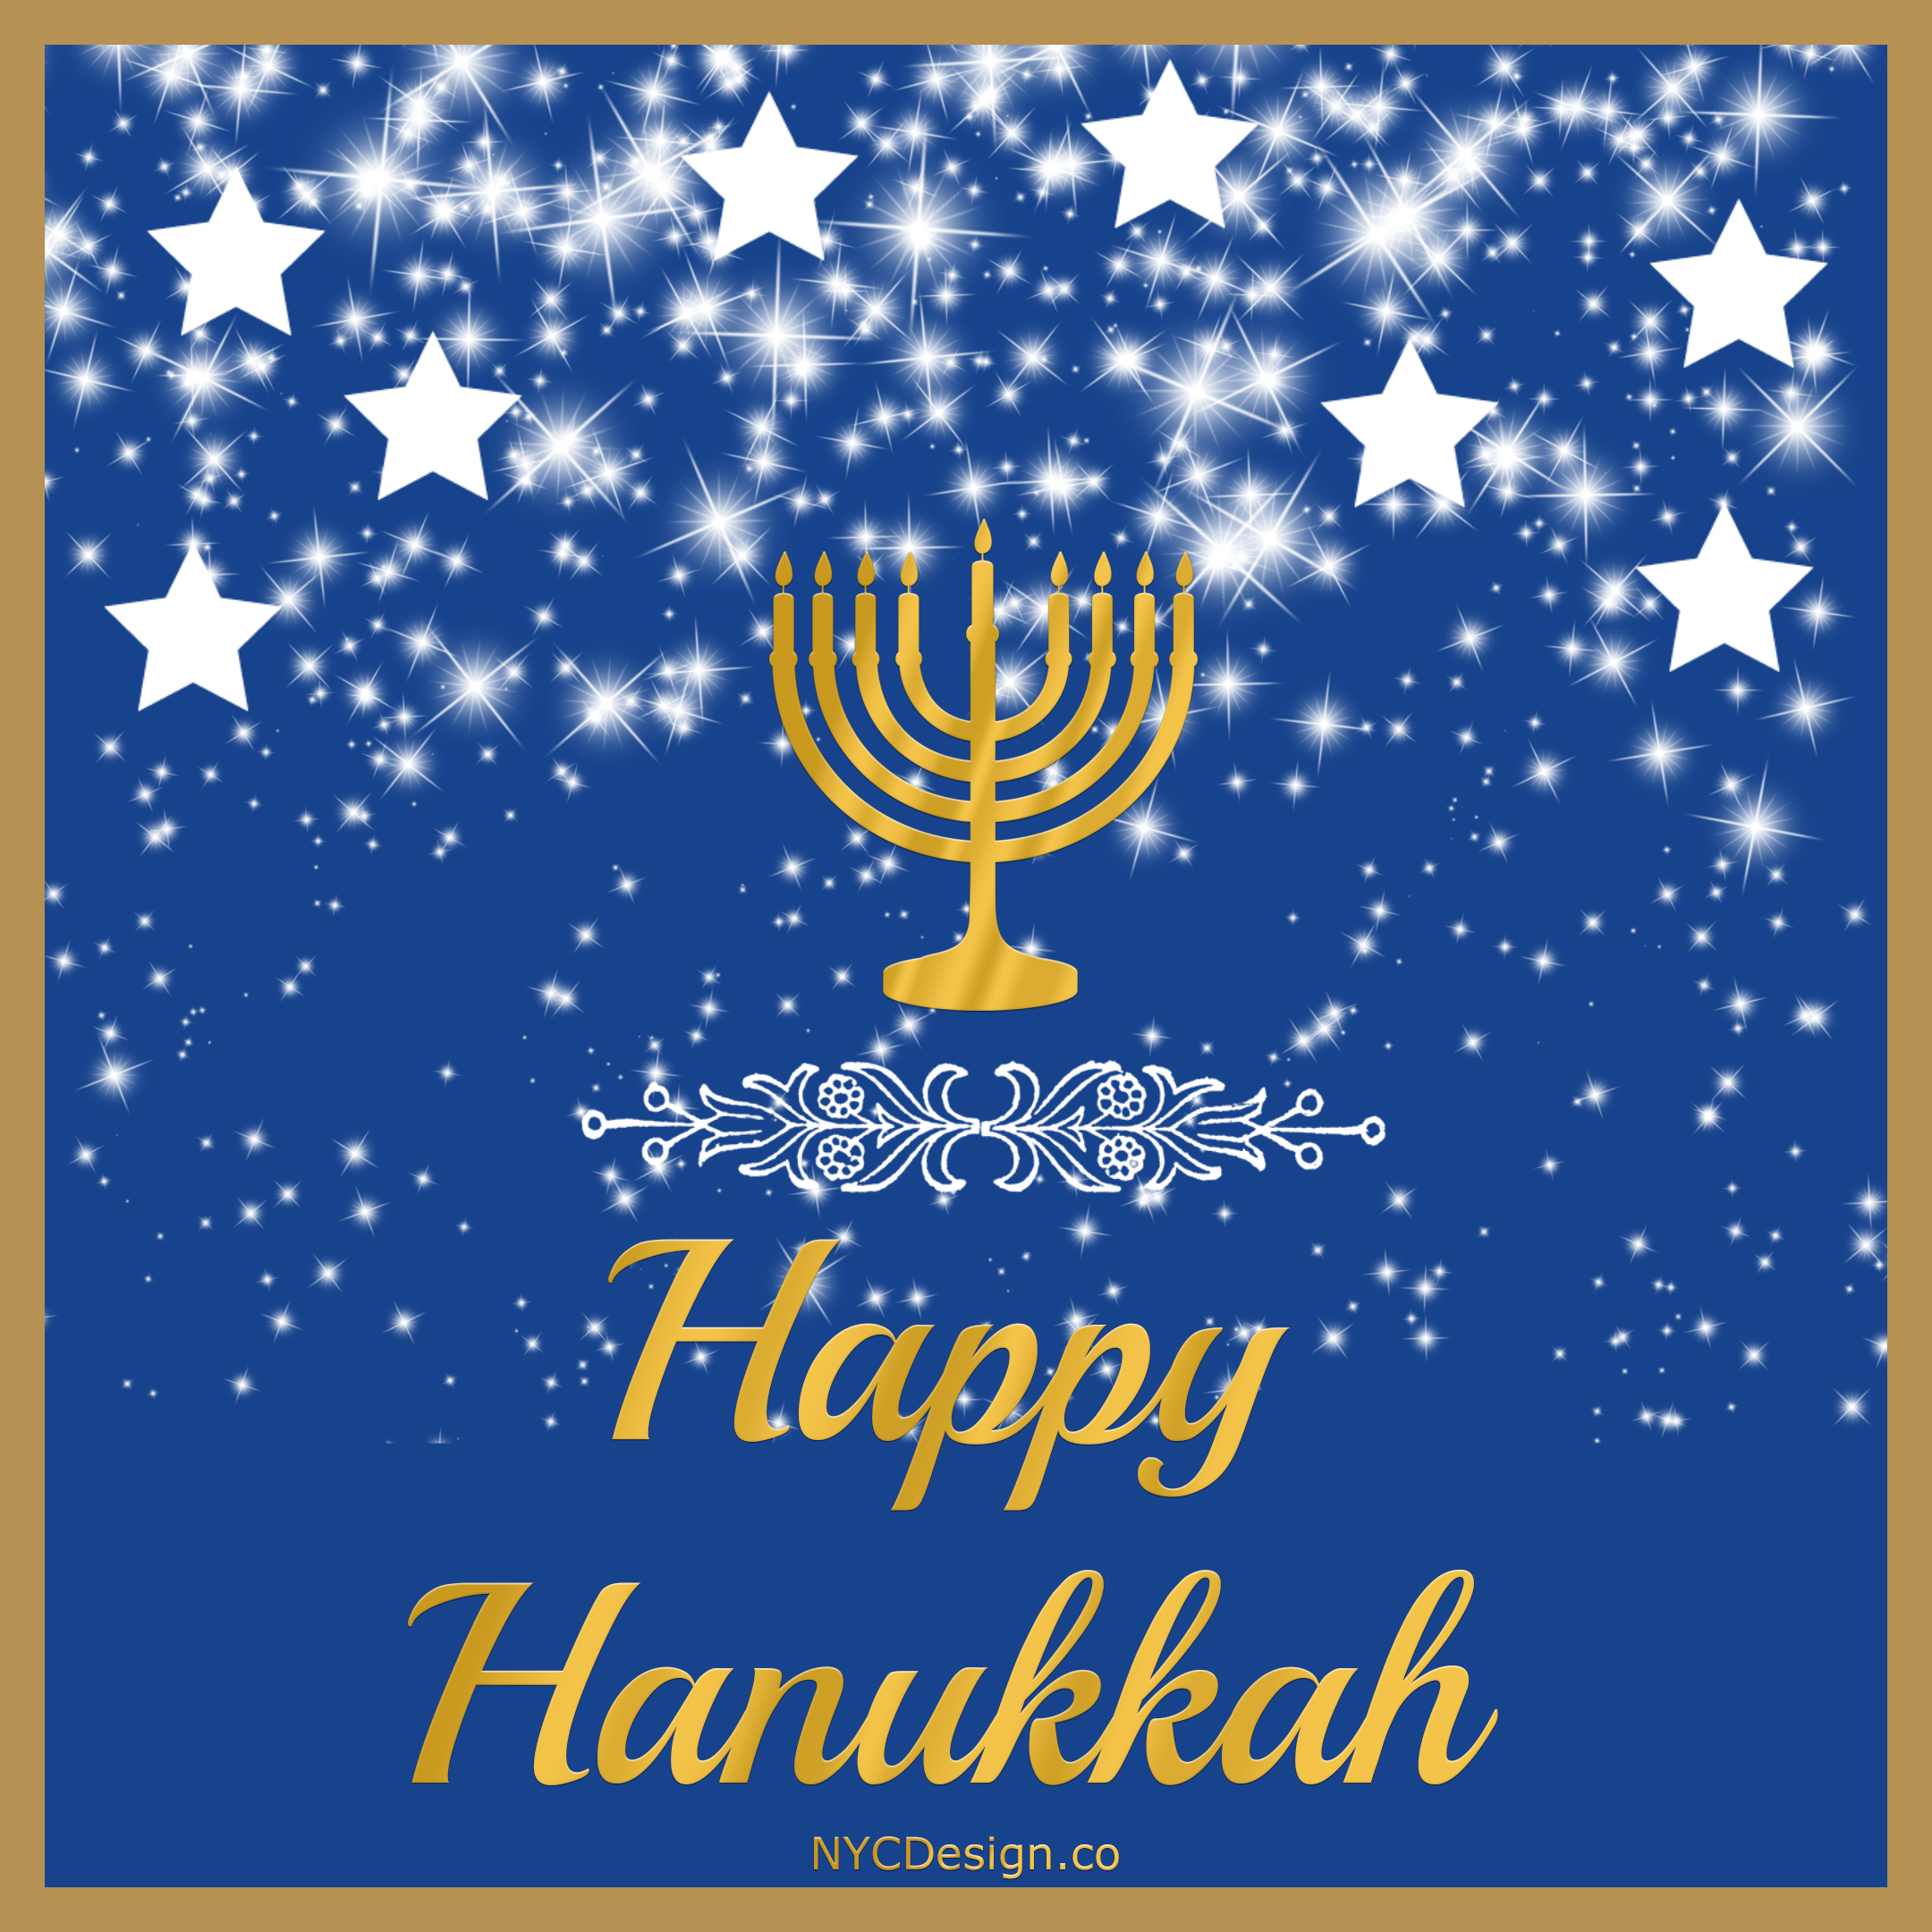 Happy Hanukkah Cards, Free Printable NYCDesign.co Printable Things